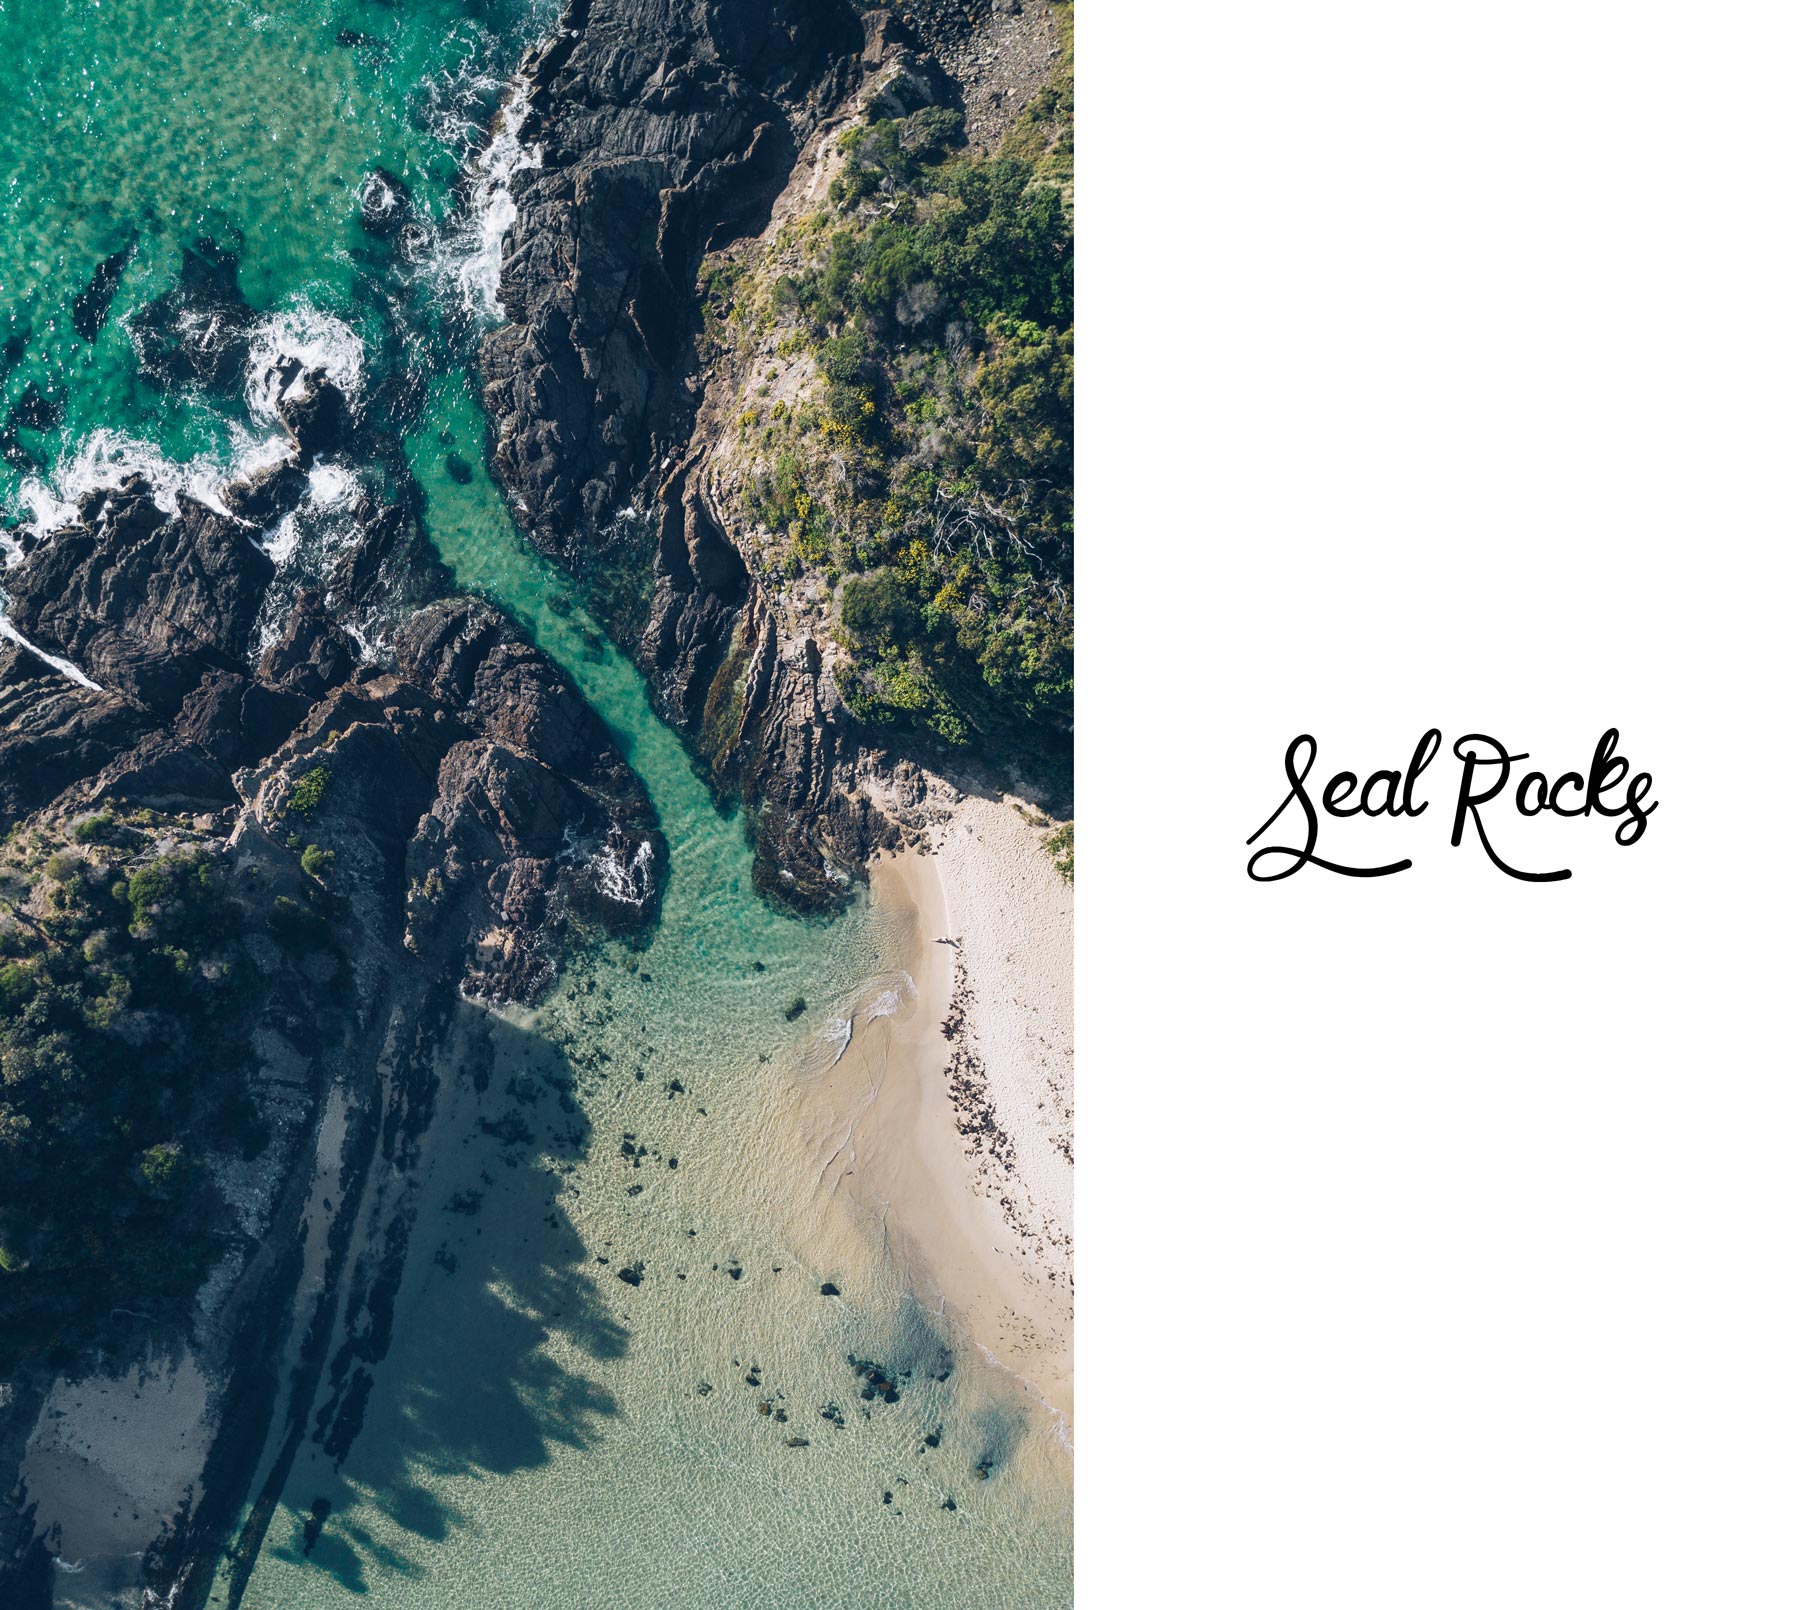 Seal Rocks, NSW